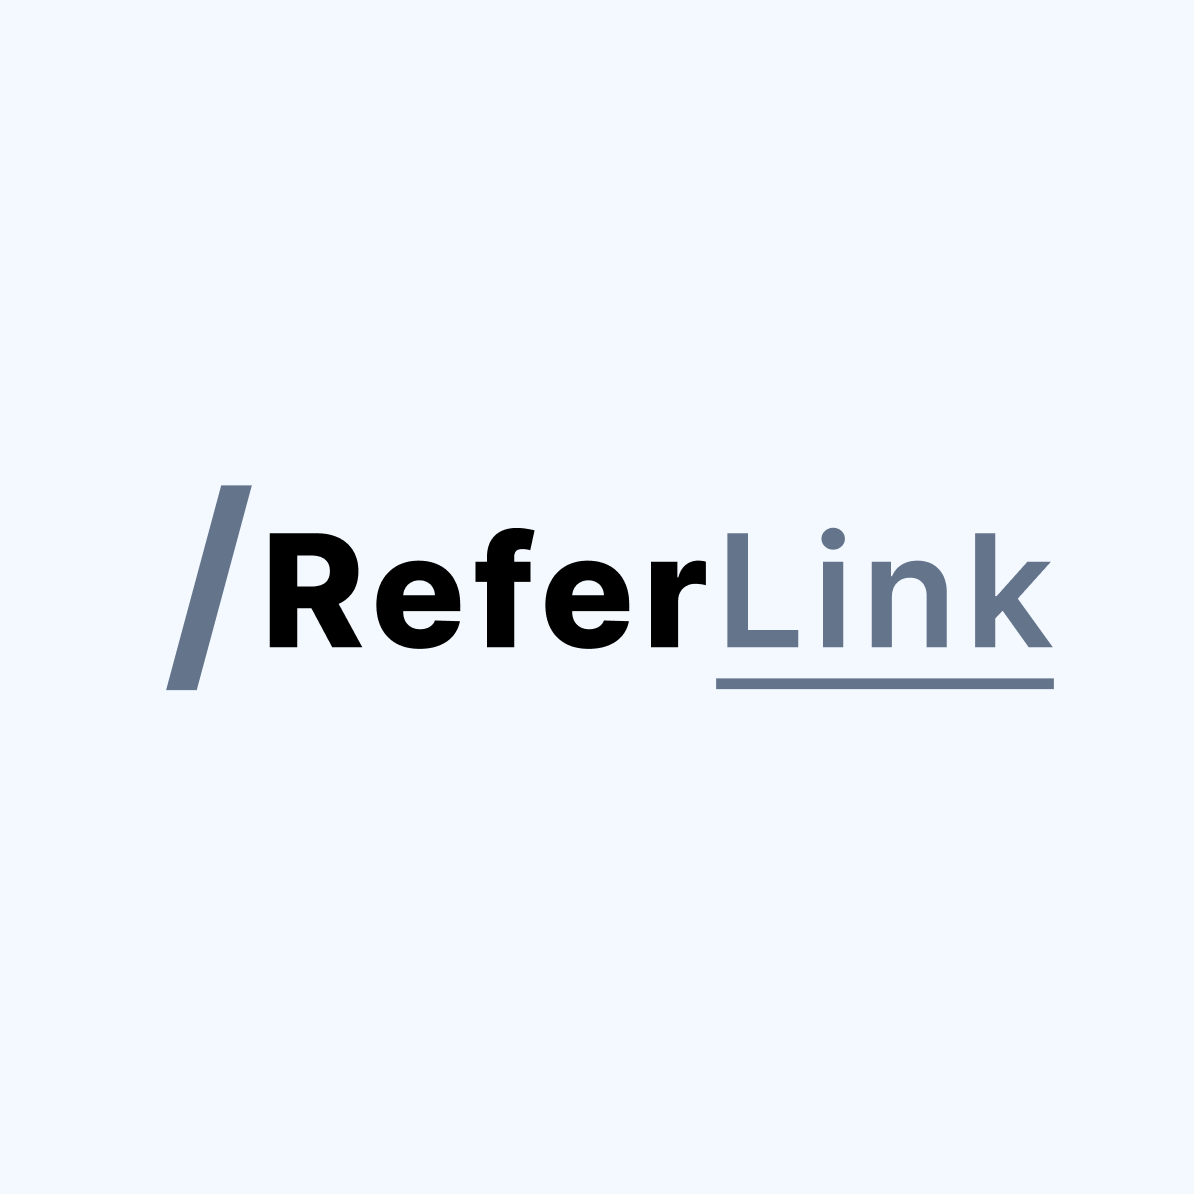 ReferLink logo